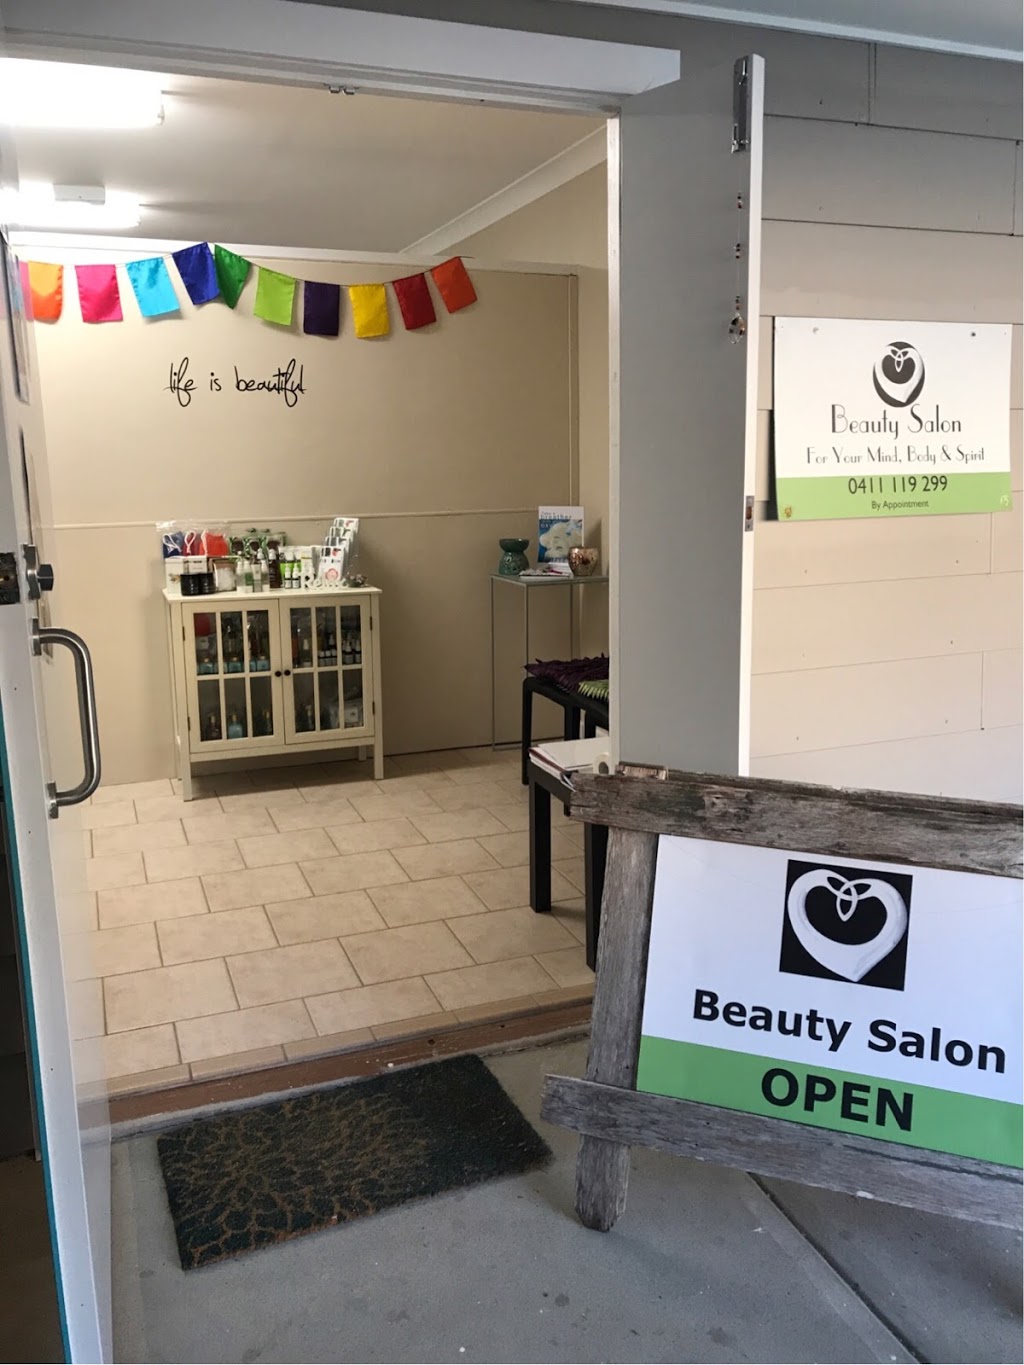 Tre Tesori Natural Therapy Beauty & Skincare | beauty salon | 92 Main St, Wooli NSW 2462, Australia | 0411119299 OR +61 411 119 299